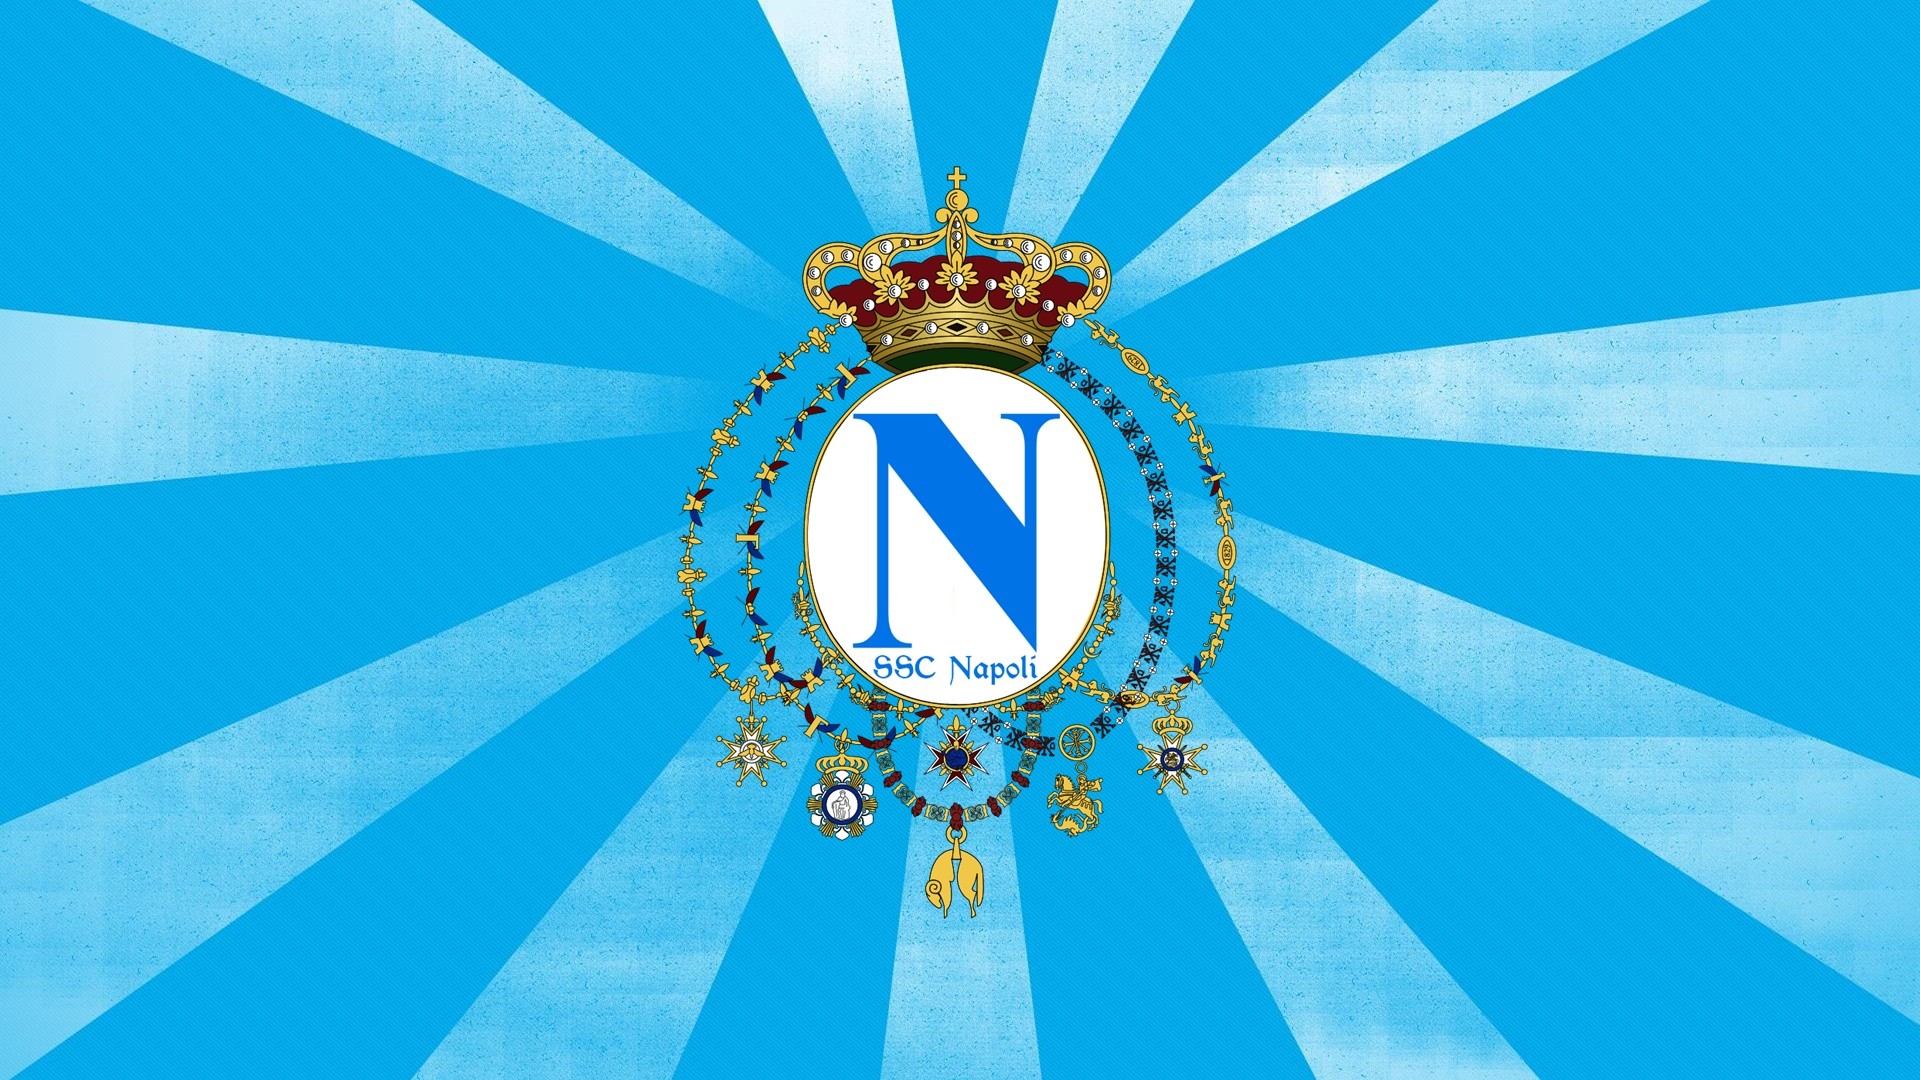 Napoli Soccer Clubs Crown Artwork Cyan Bourbon Dynasty Naples Campania 1920x1080